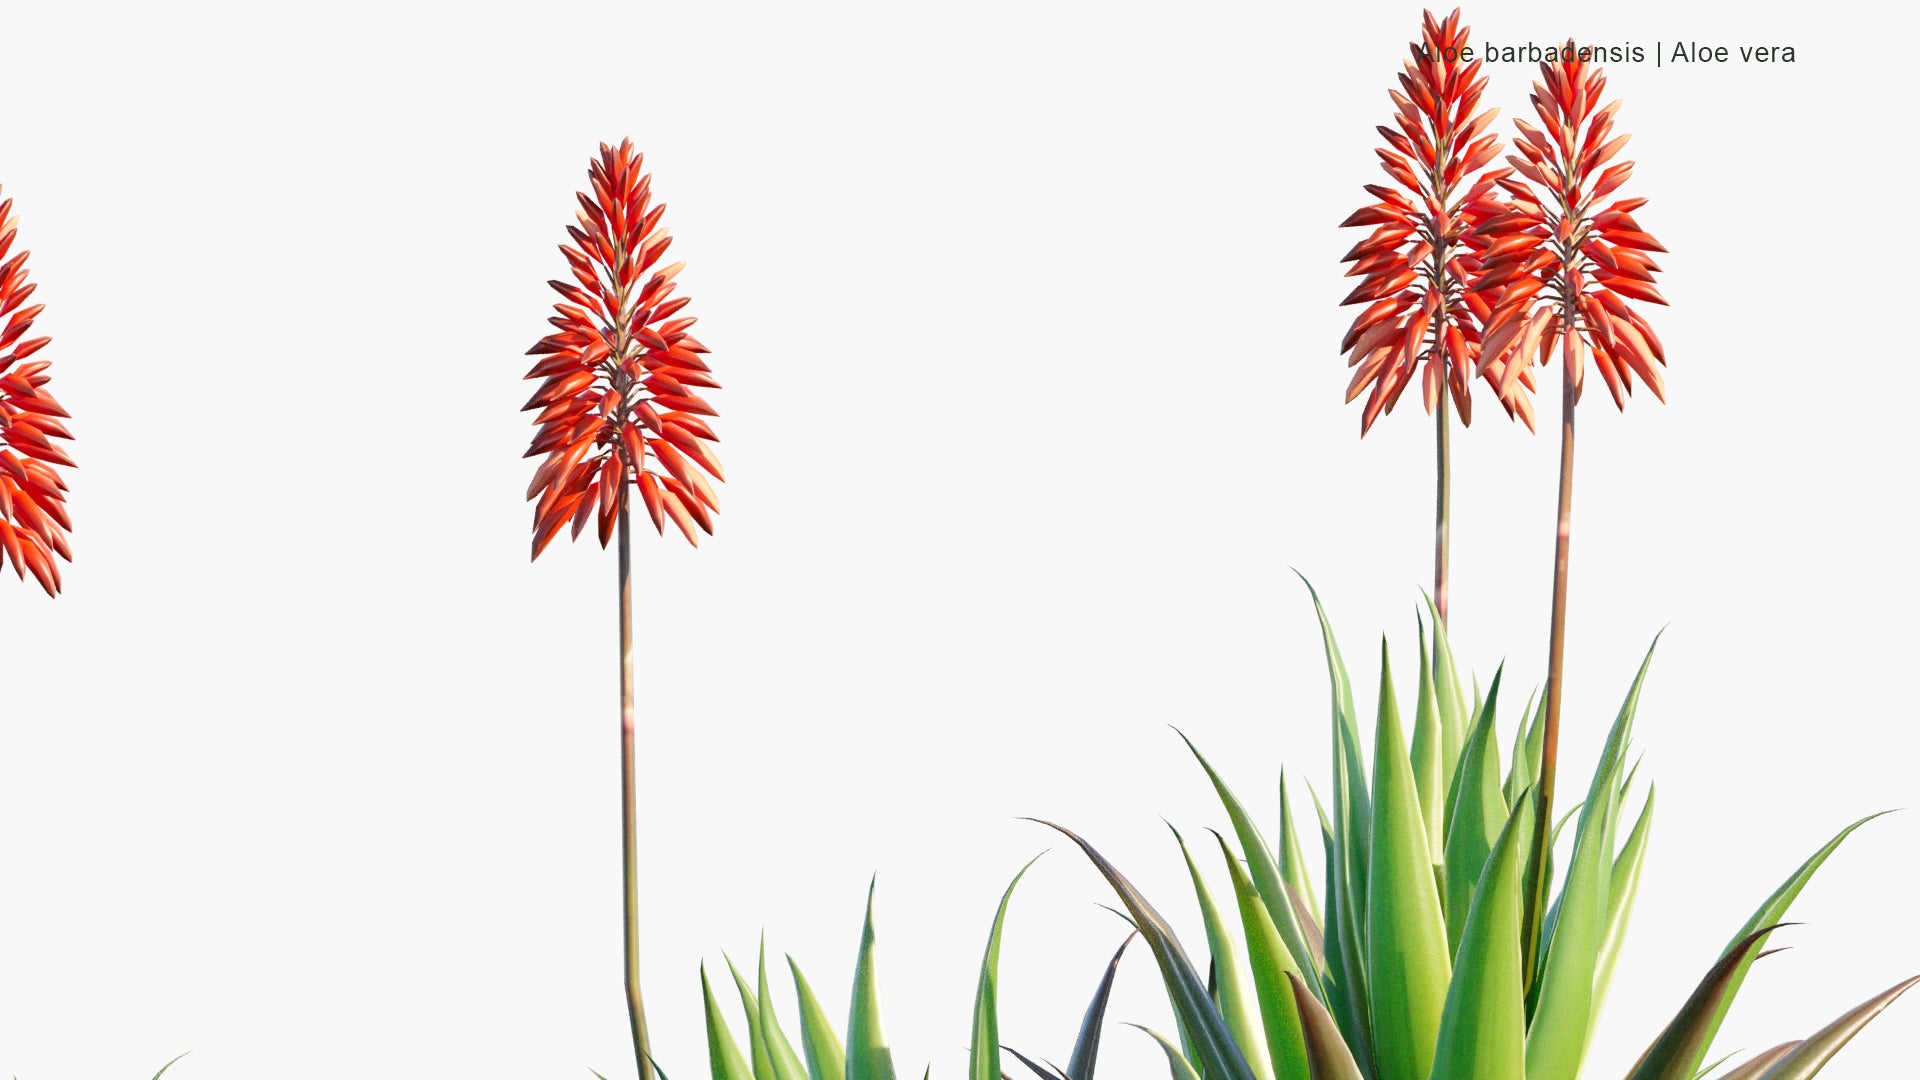 Low Poly Aloe Barbadensis - Aloe Vera (3D Model)